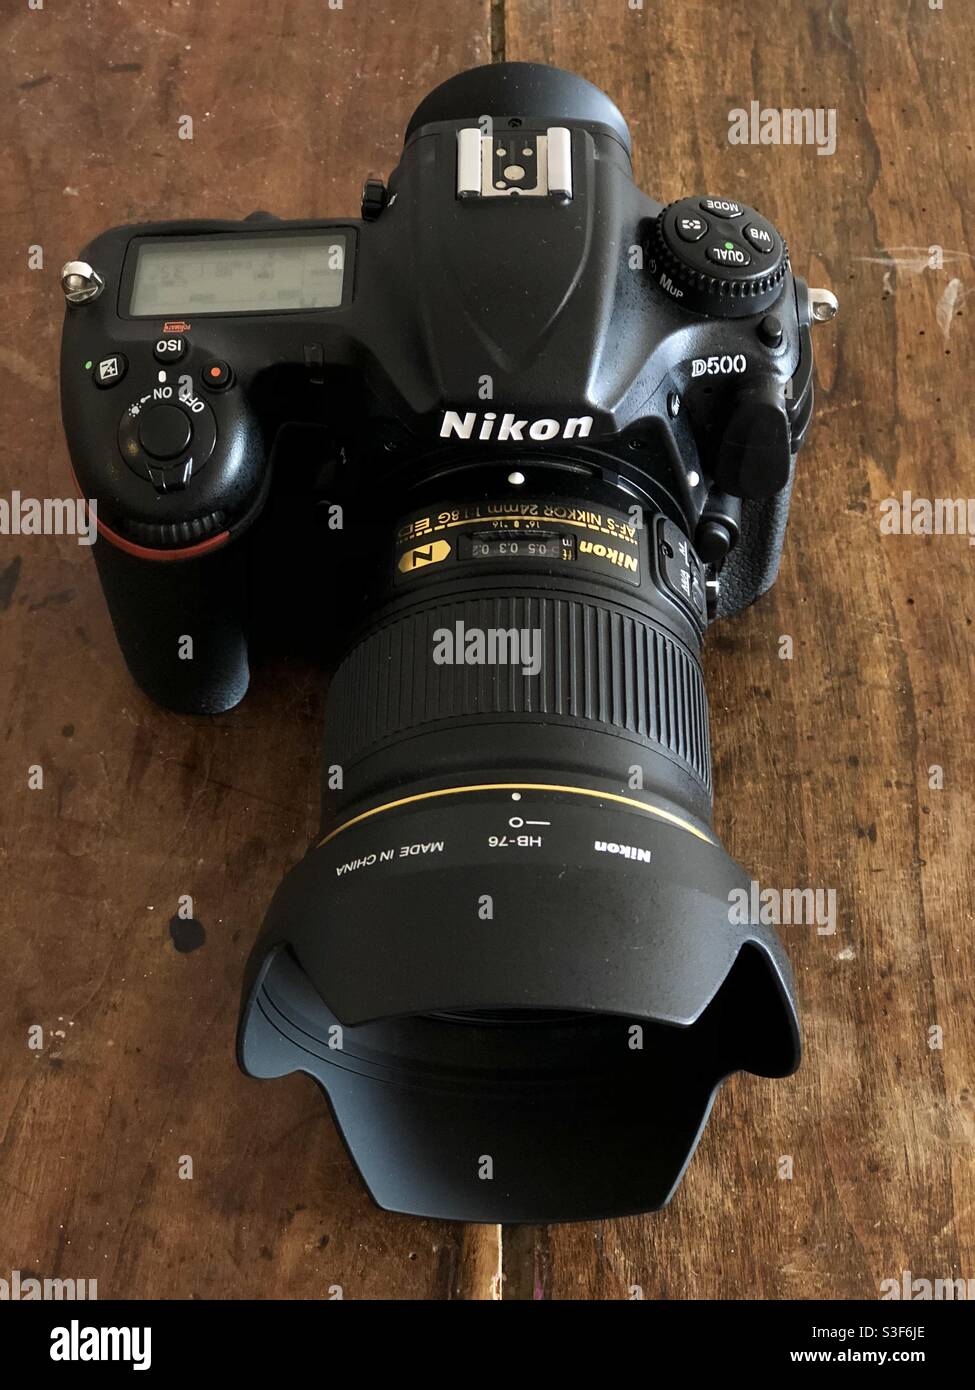 Nikon D500 DSLR digital camera with a 24mm 1.8 lens Stock Photo - Alamy